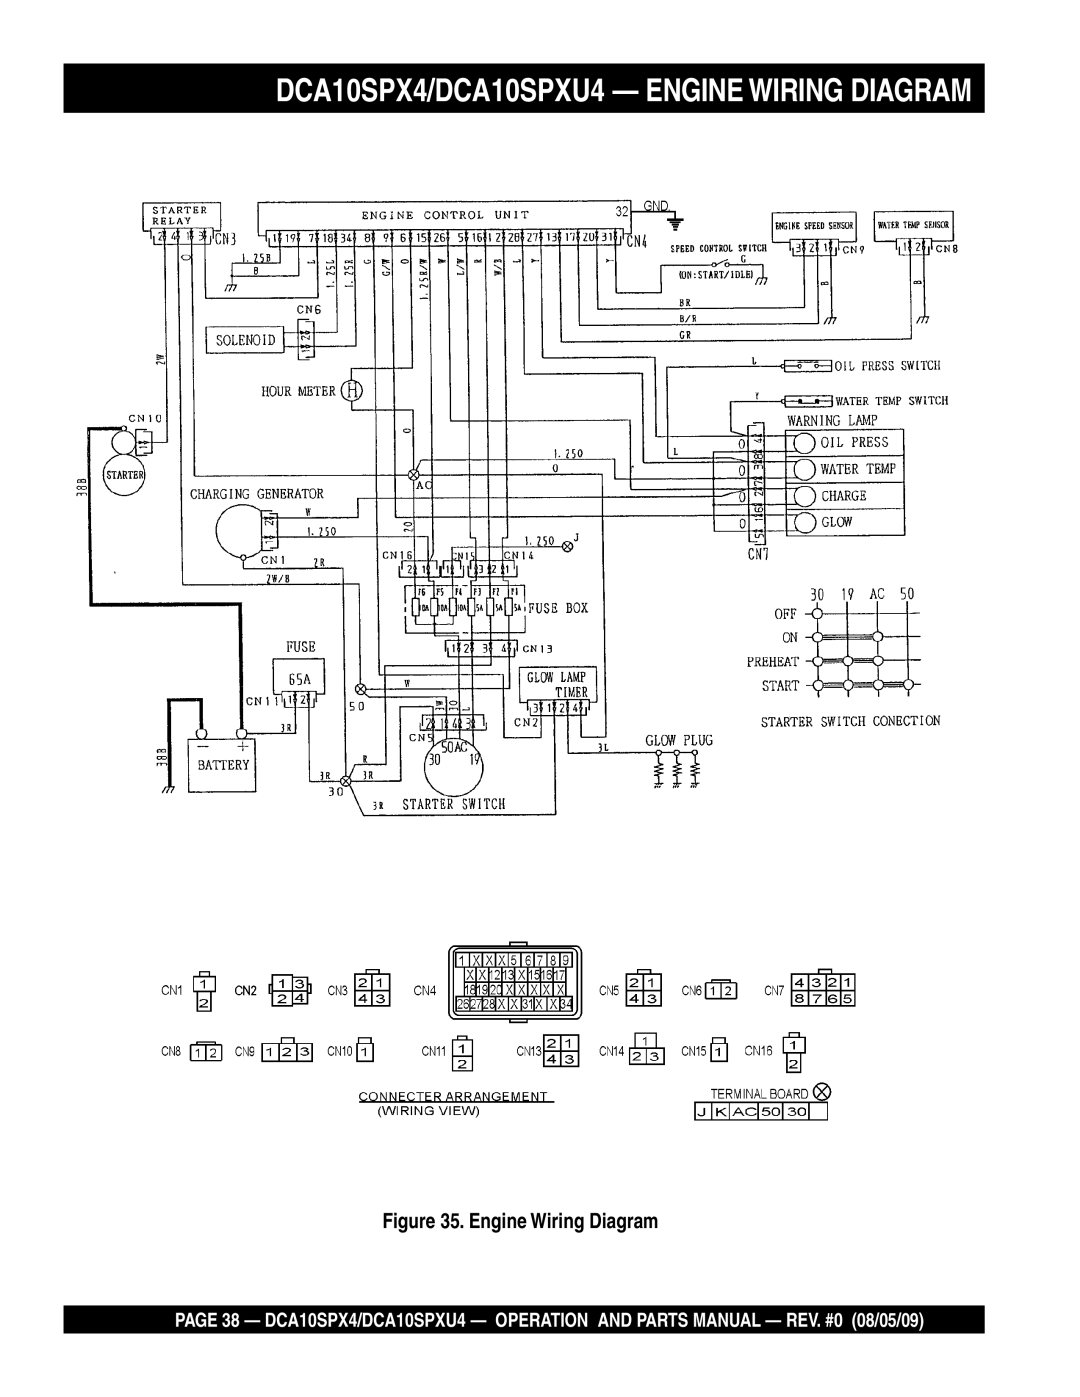 Multiquip operation manual DCA10SPX4/DCA10SPXU4 - ENGINE WIRING DIAGRAM, Engine Wiring Diagram 